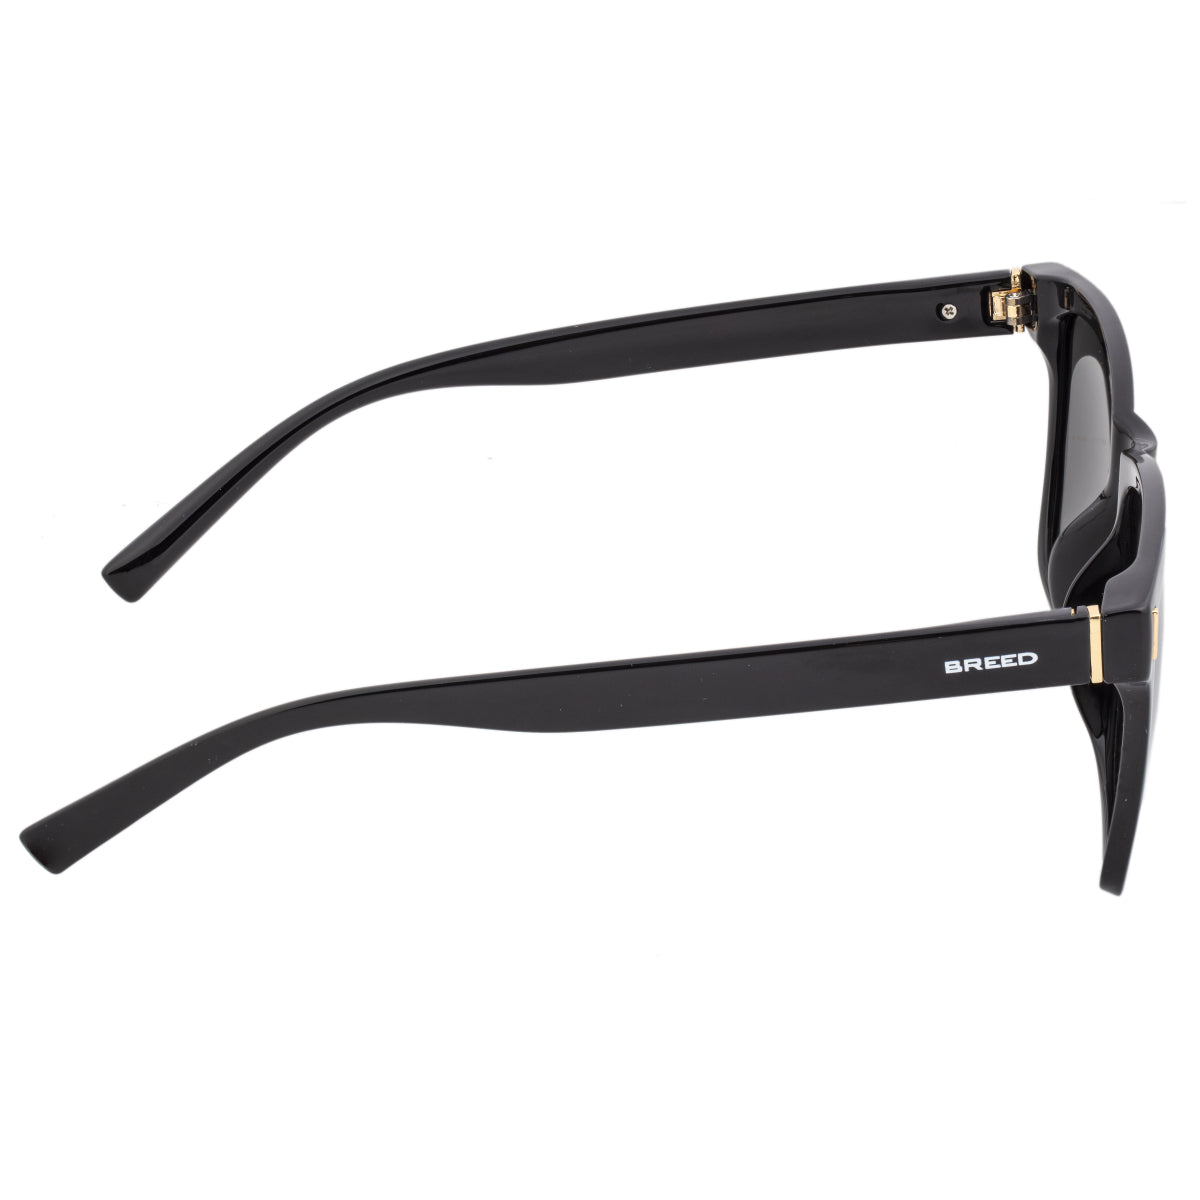 Breed Pictor Polarized Sunglasses - Black/Silver - BSG065SL